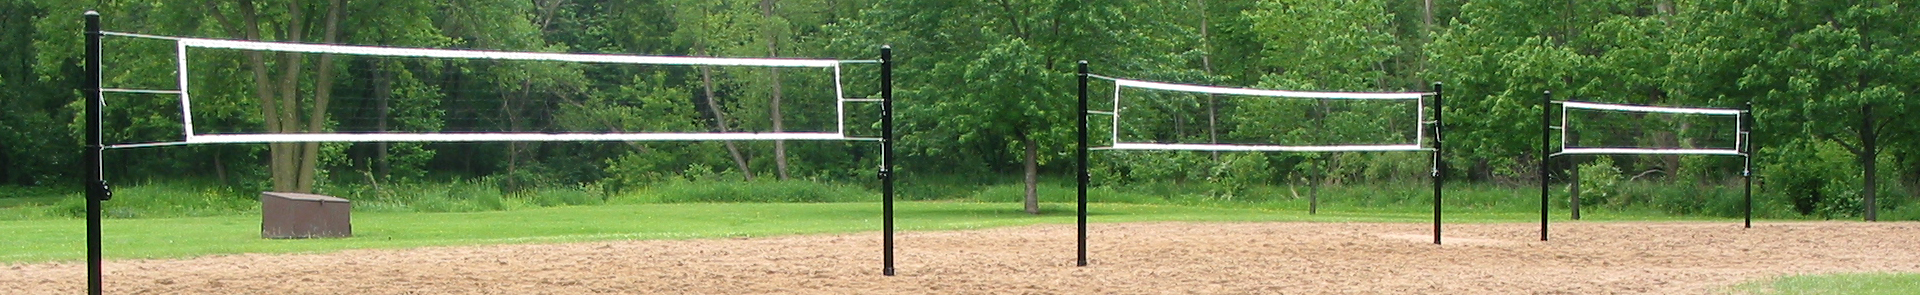 Douglas Outdoor Volleyball